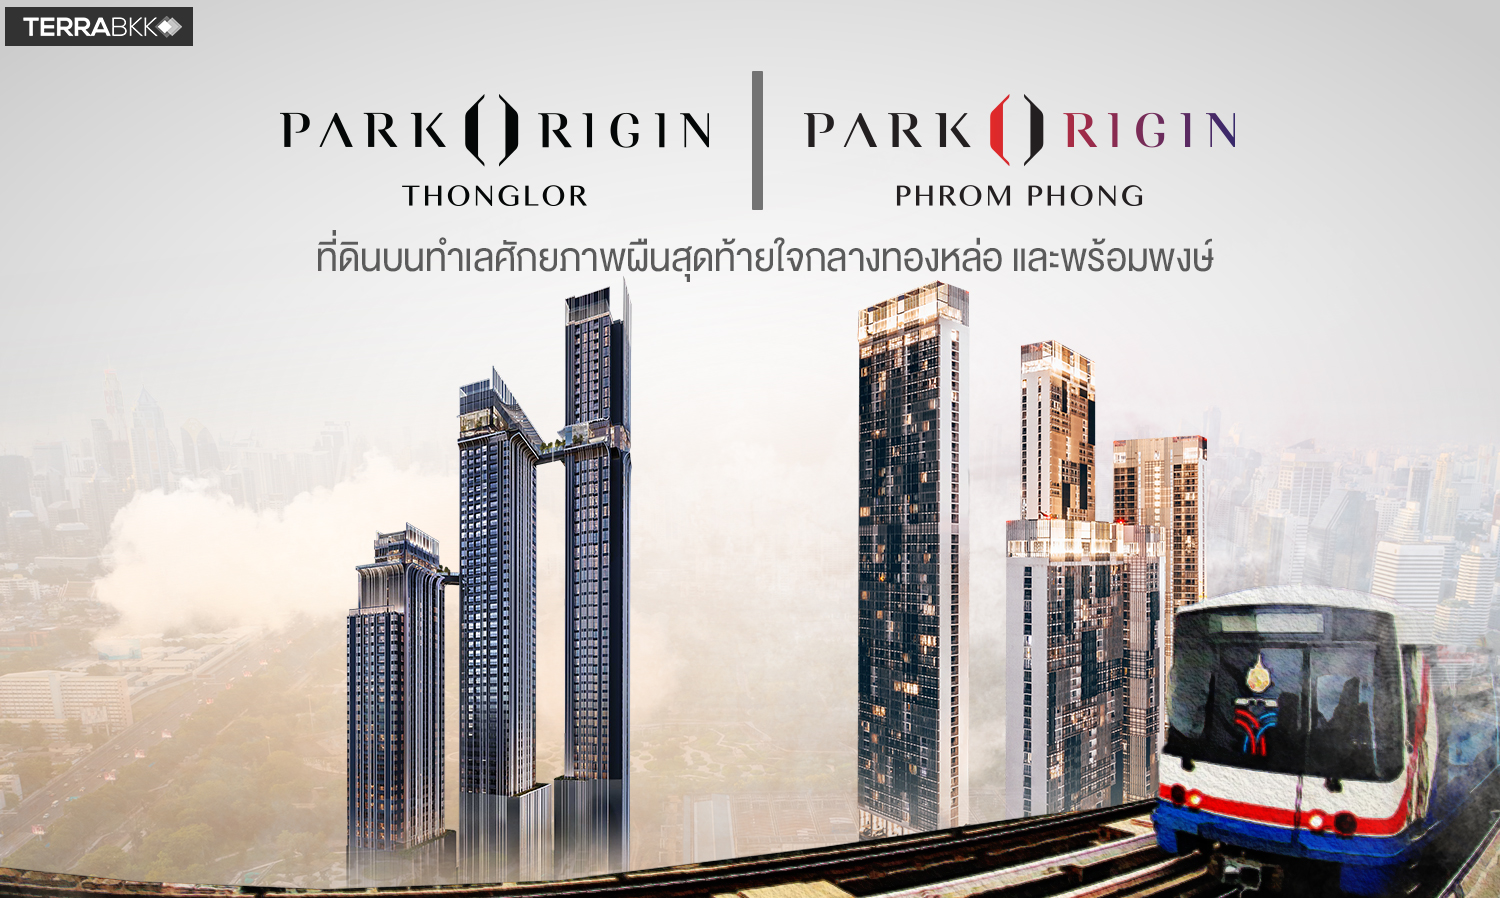  park-origin-thonglor-park-origin-phromphong-ที่ดินบนทำเลศักยภา